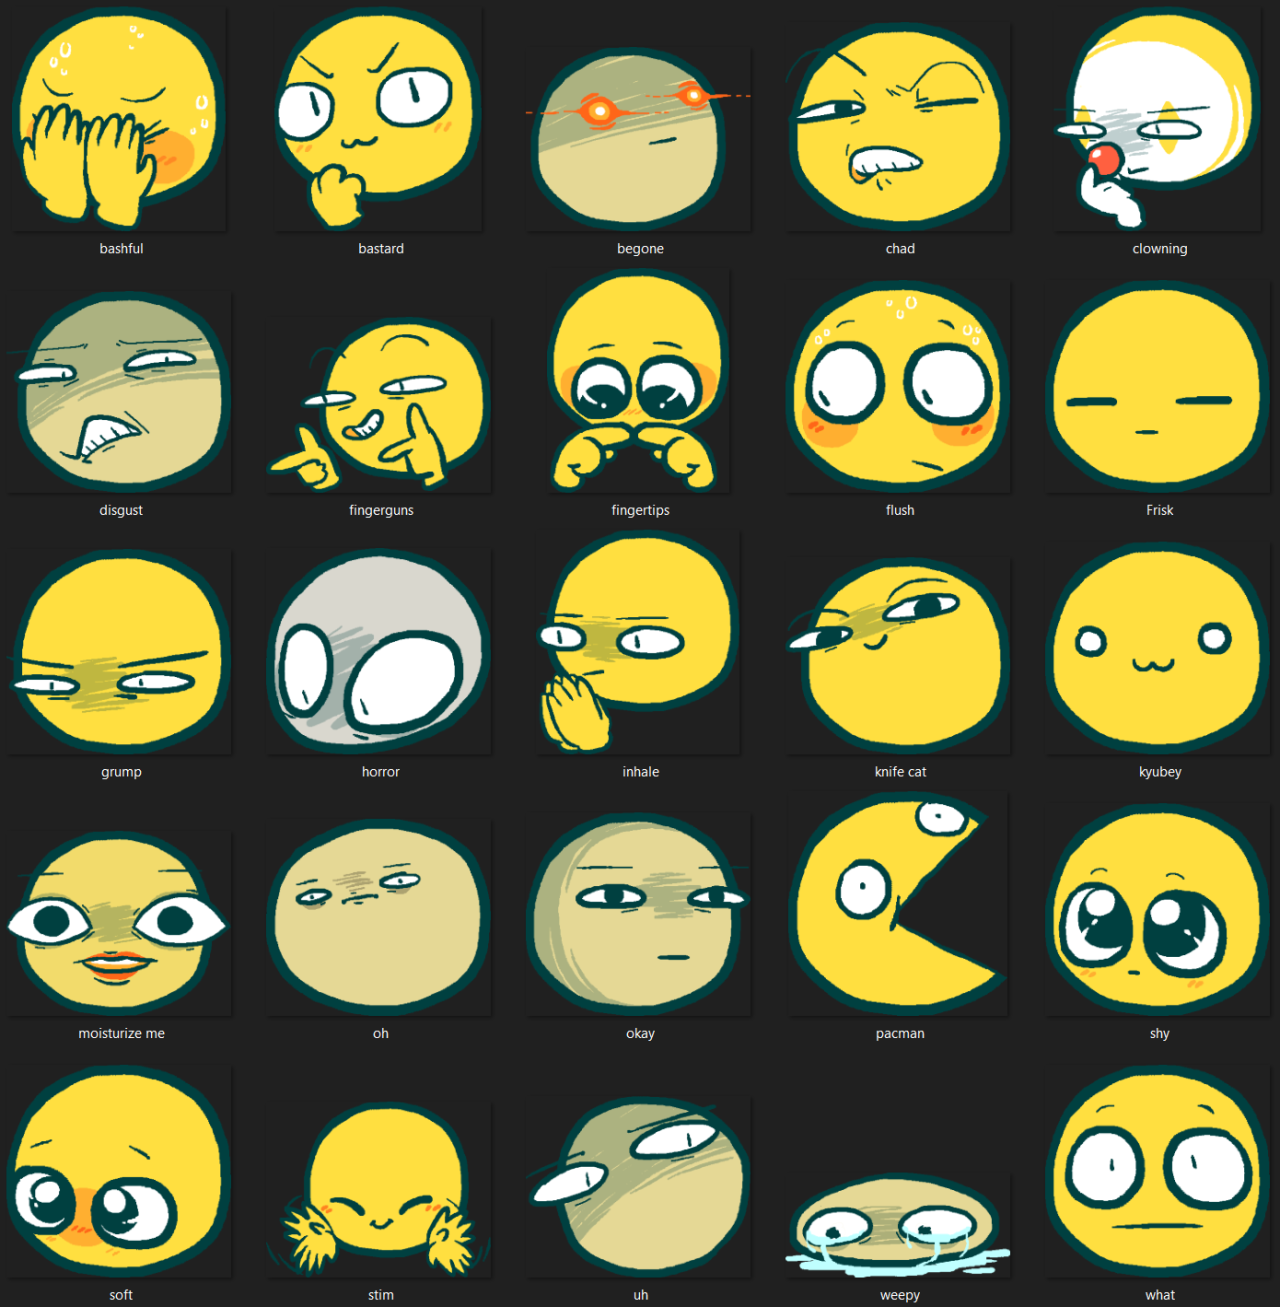 chad emoji alien meme｜TikTok Search